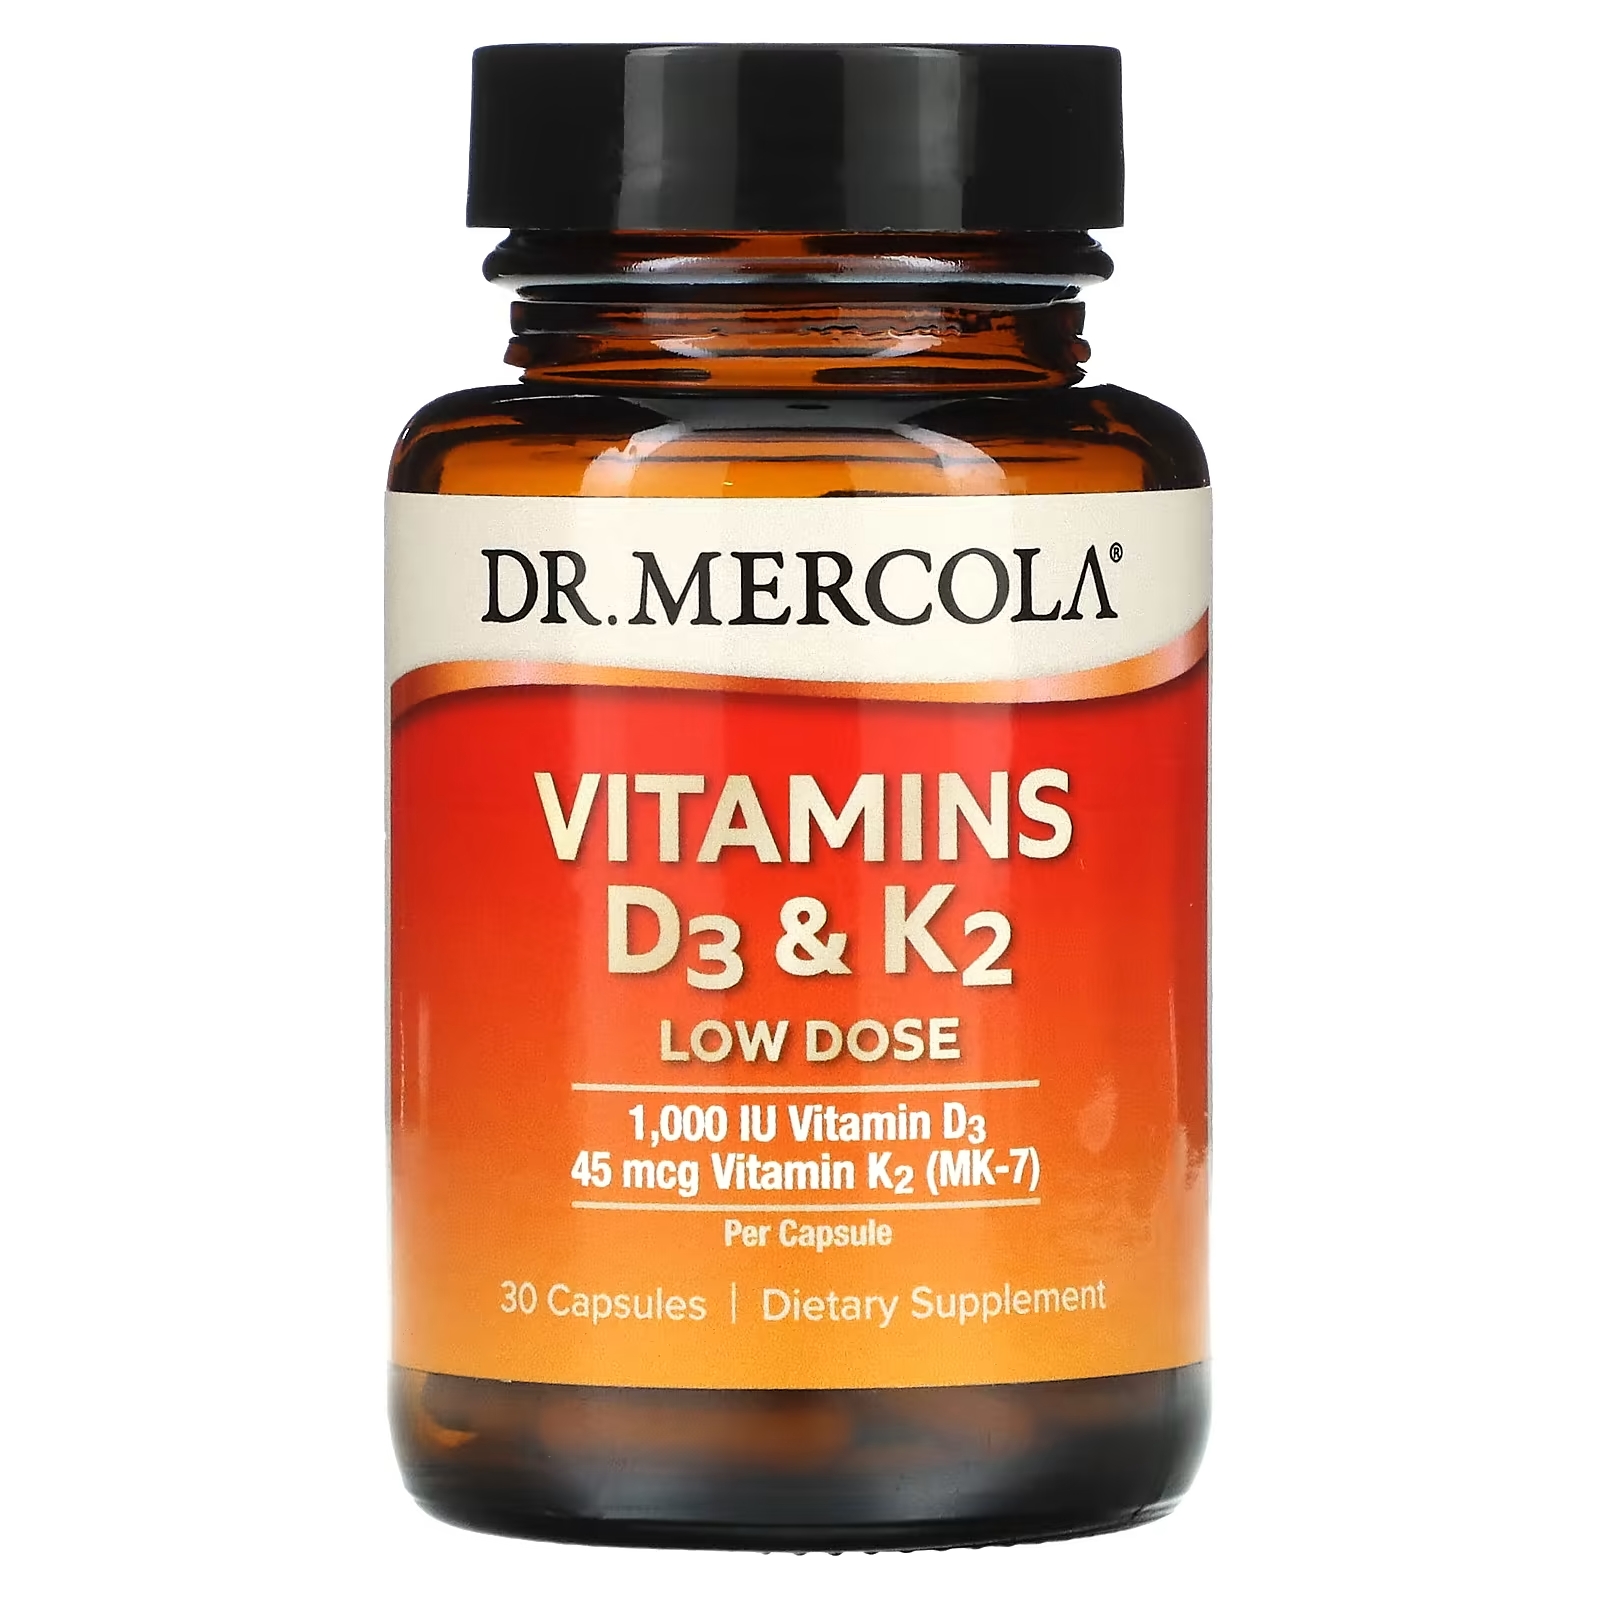 Dr. Mercola Vitamins D3 & K2 Low Dose, 30 капсул dr mercola витамины d3 и k2 в низкой дозе 30 капсул